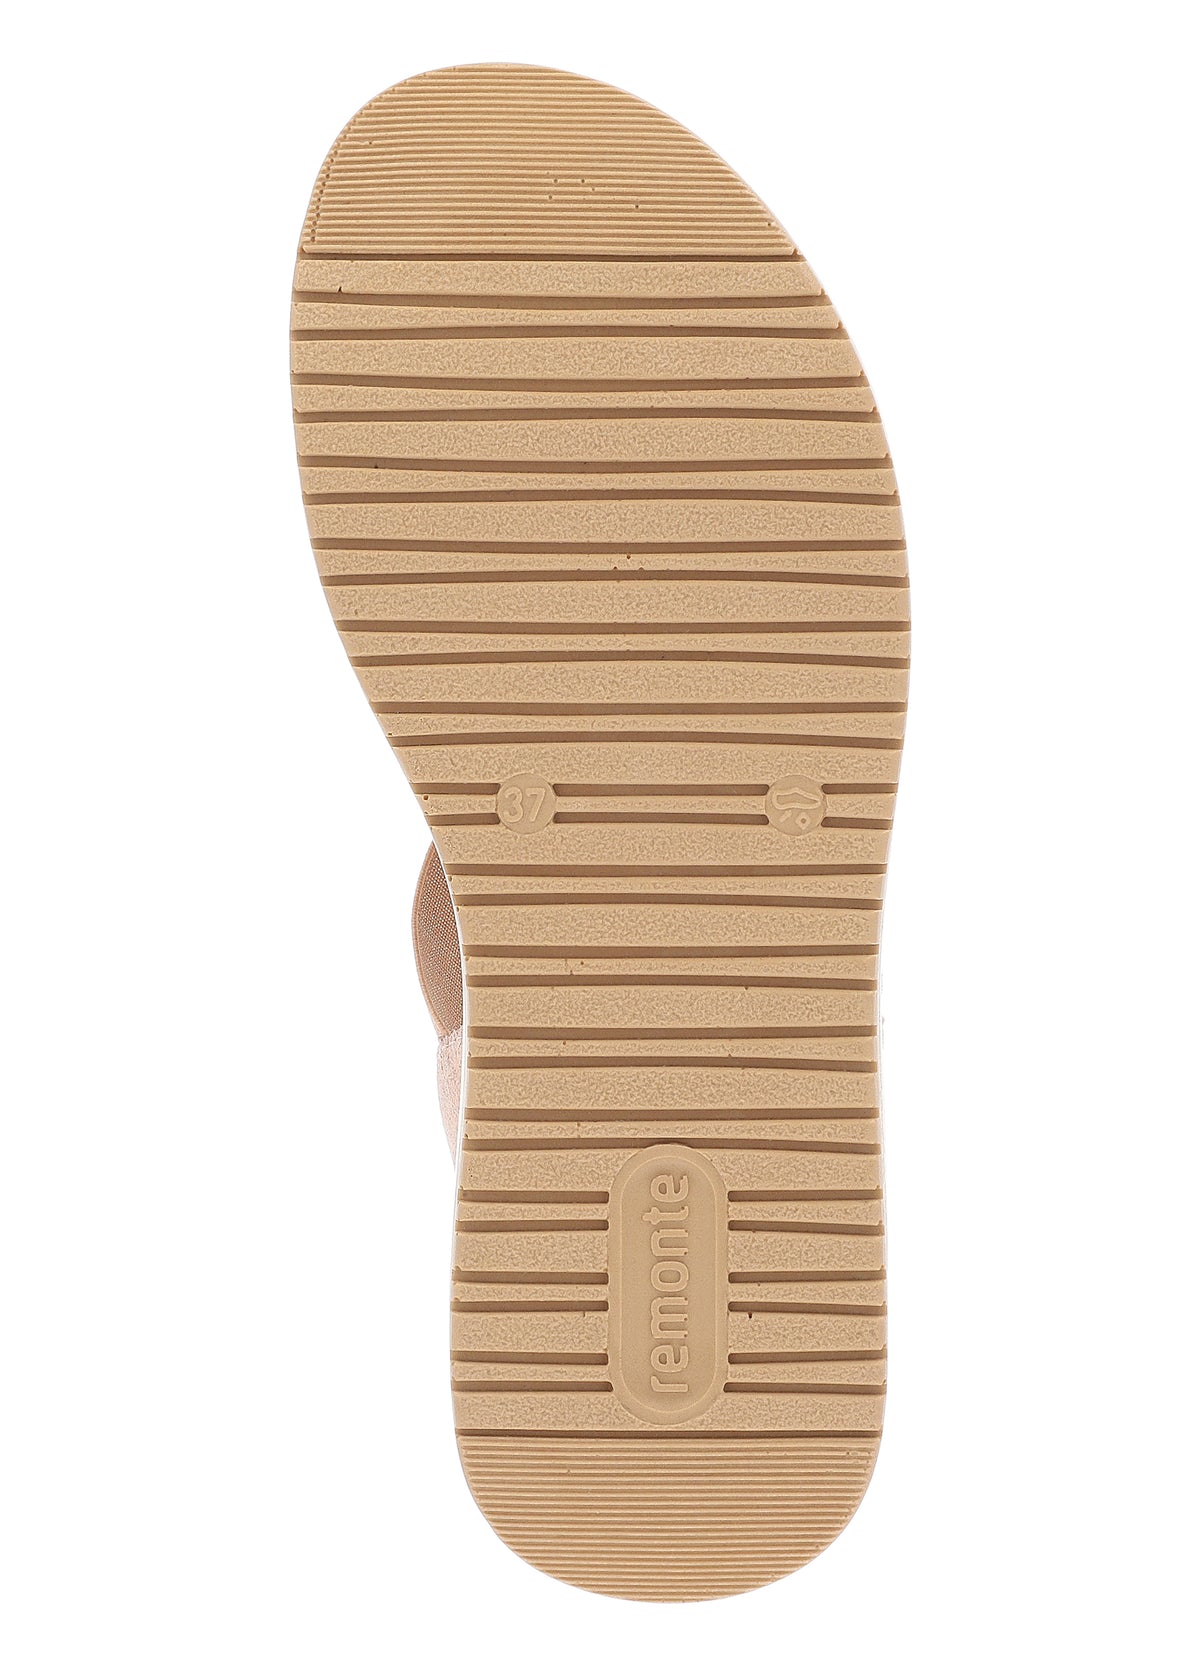 Sandaler med tjock sula - nude, roséguld, elastiska remmar